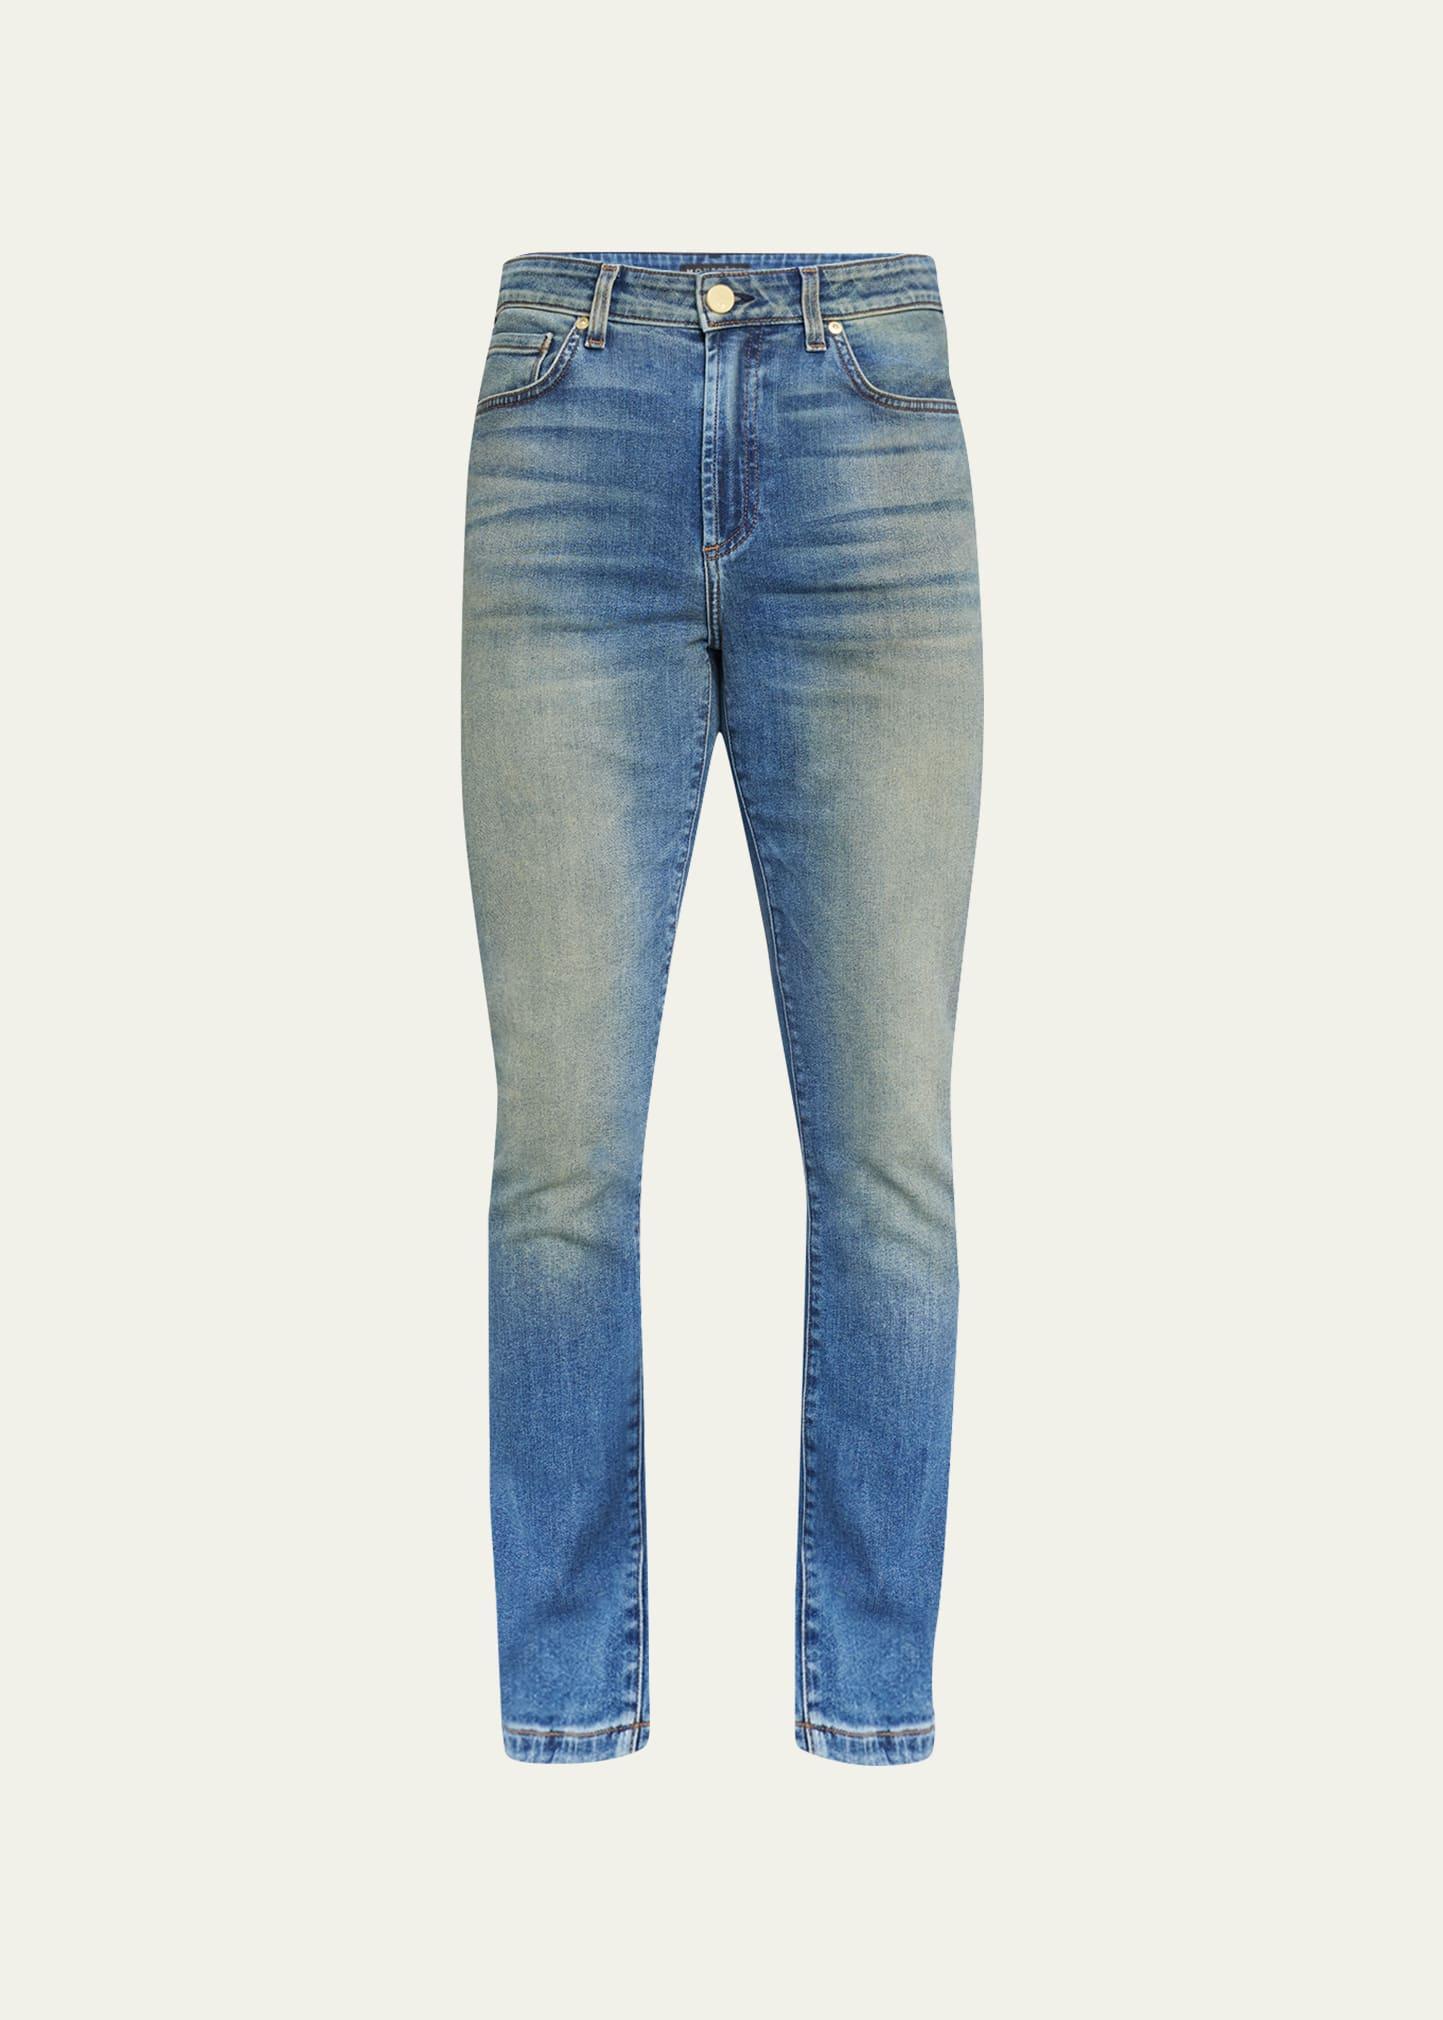 monfrere Men's Greyson Skinny Zip-Cuff Jeans - Size: 38 - DARK VINTAGE Product Image